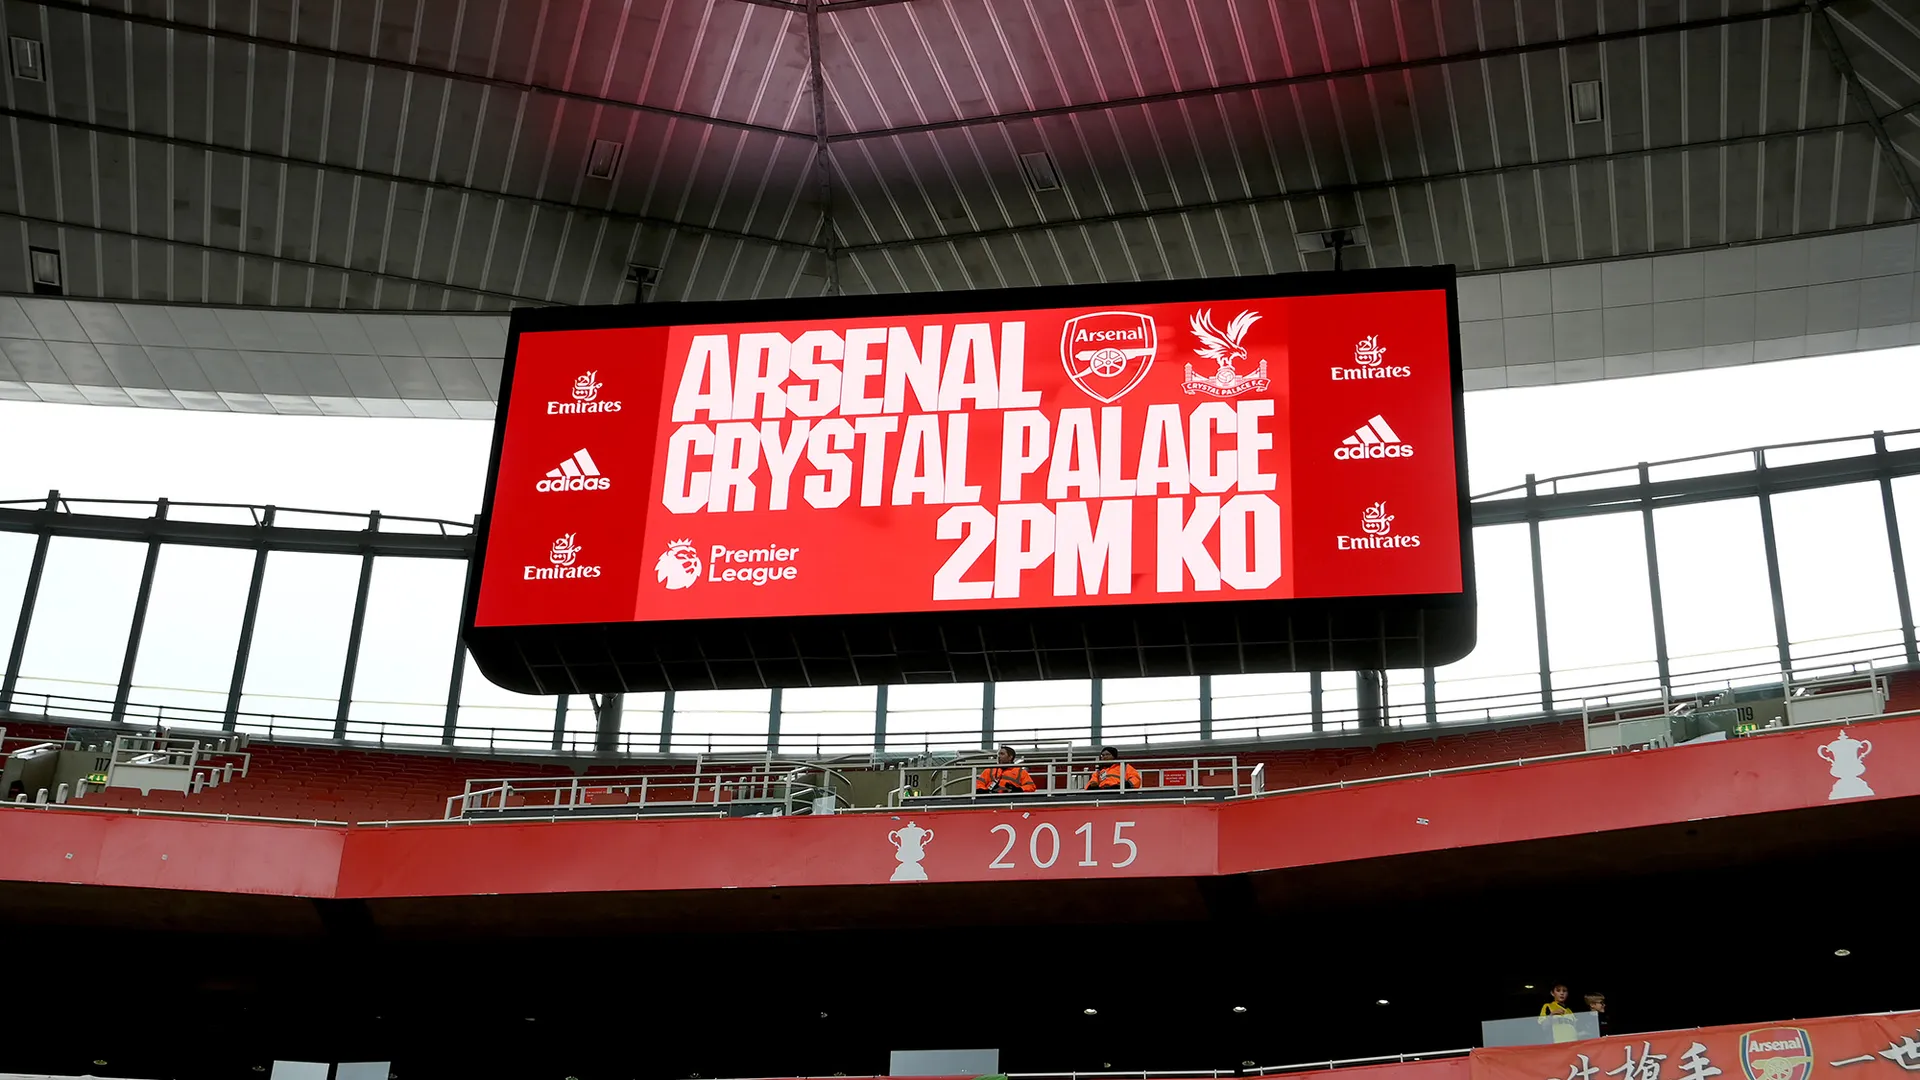 Arsenal vs Crystal Palace Premier League live streaming